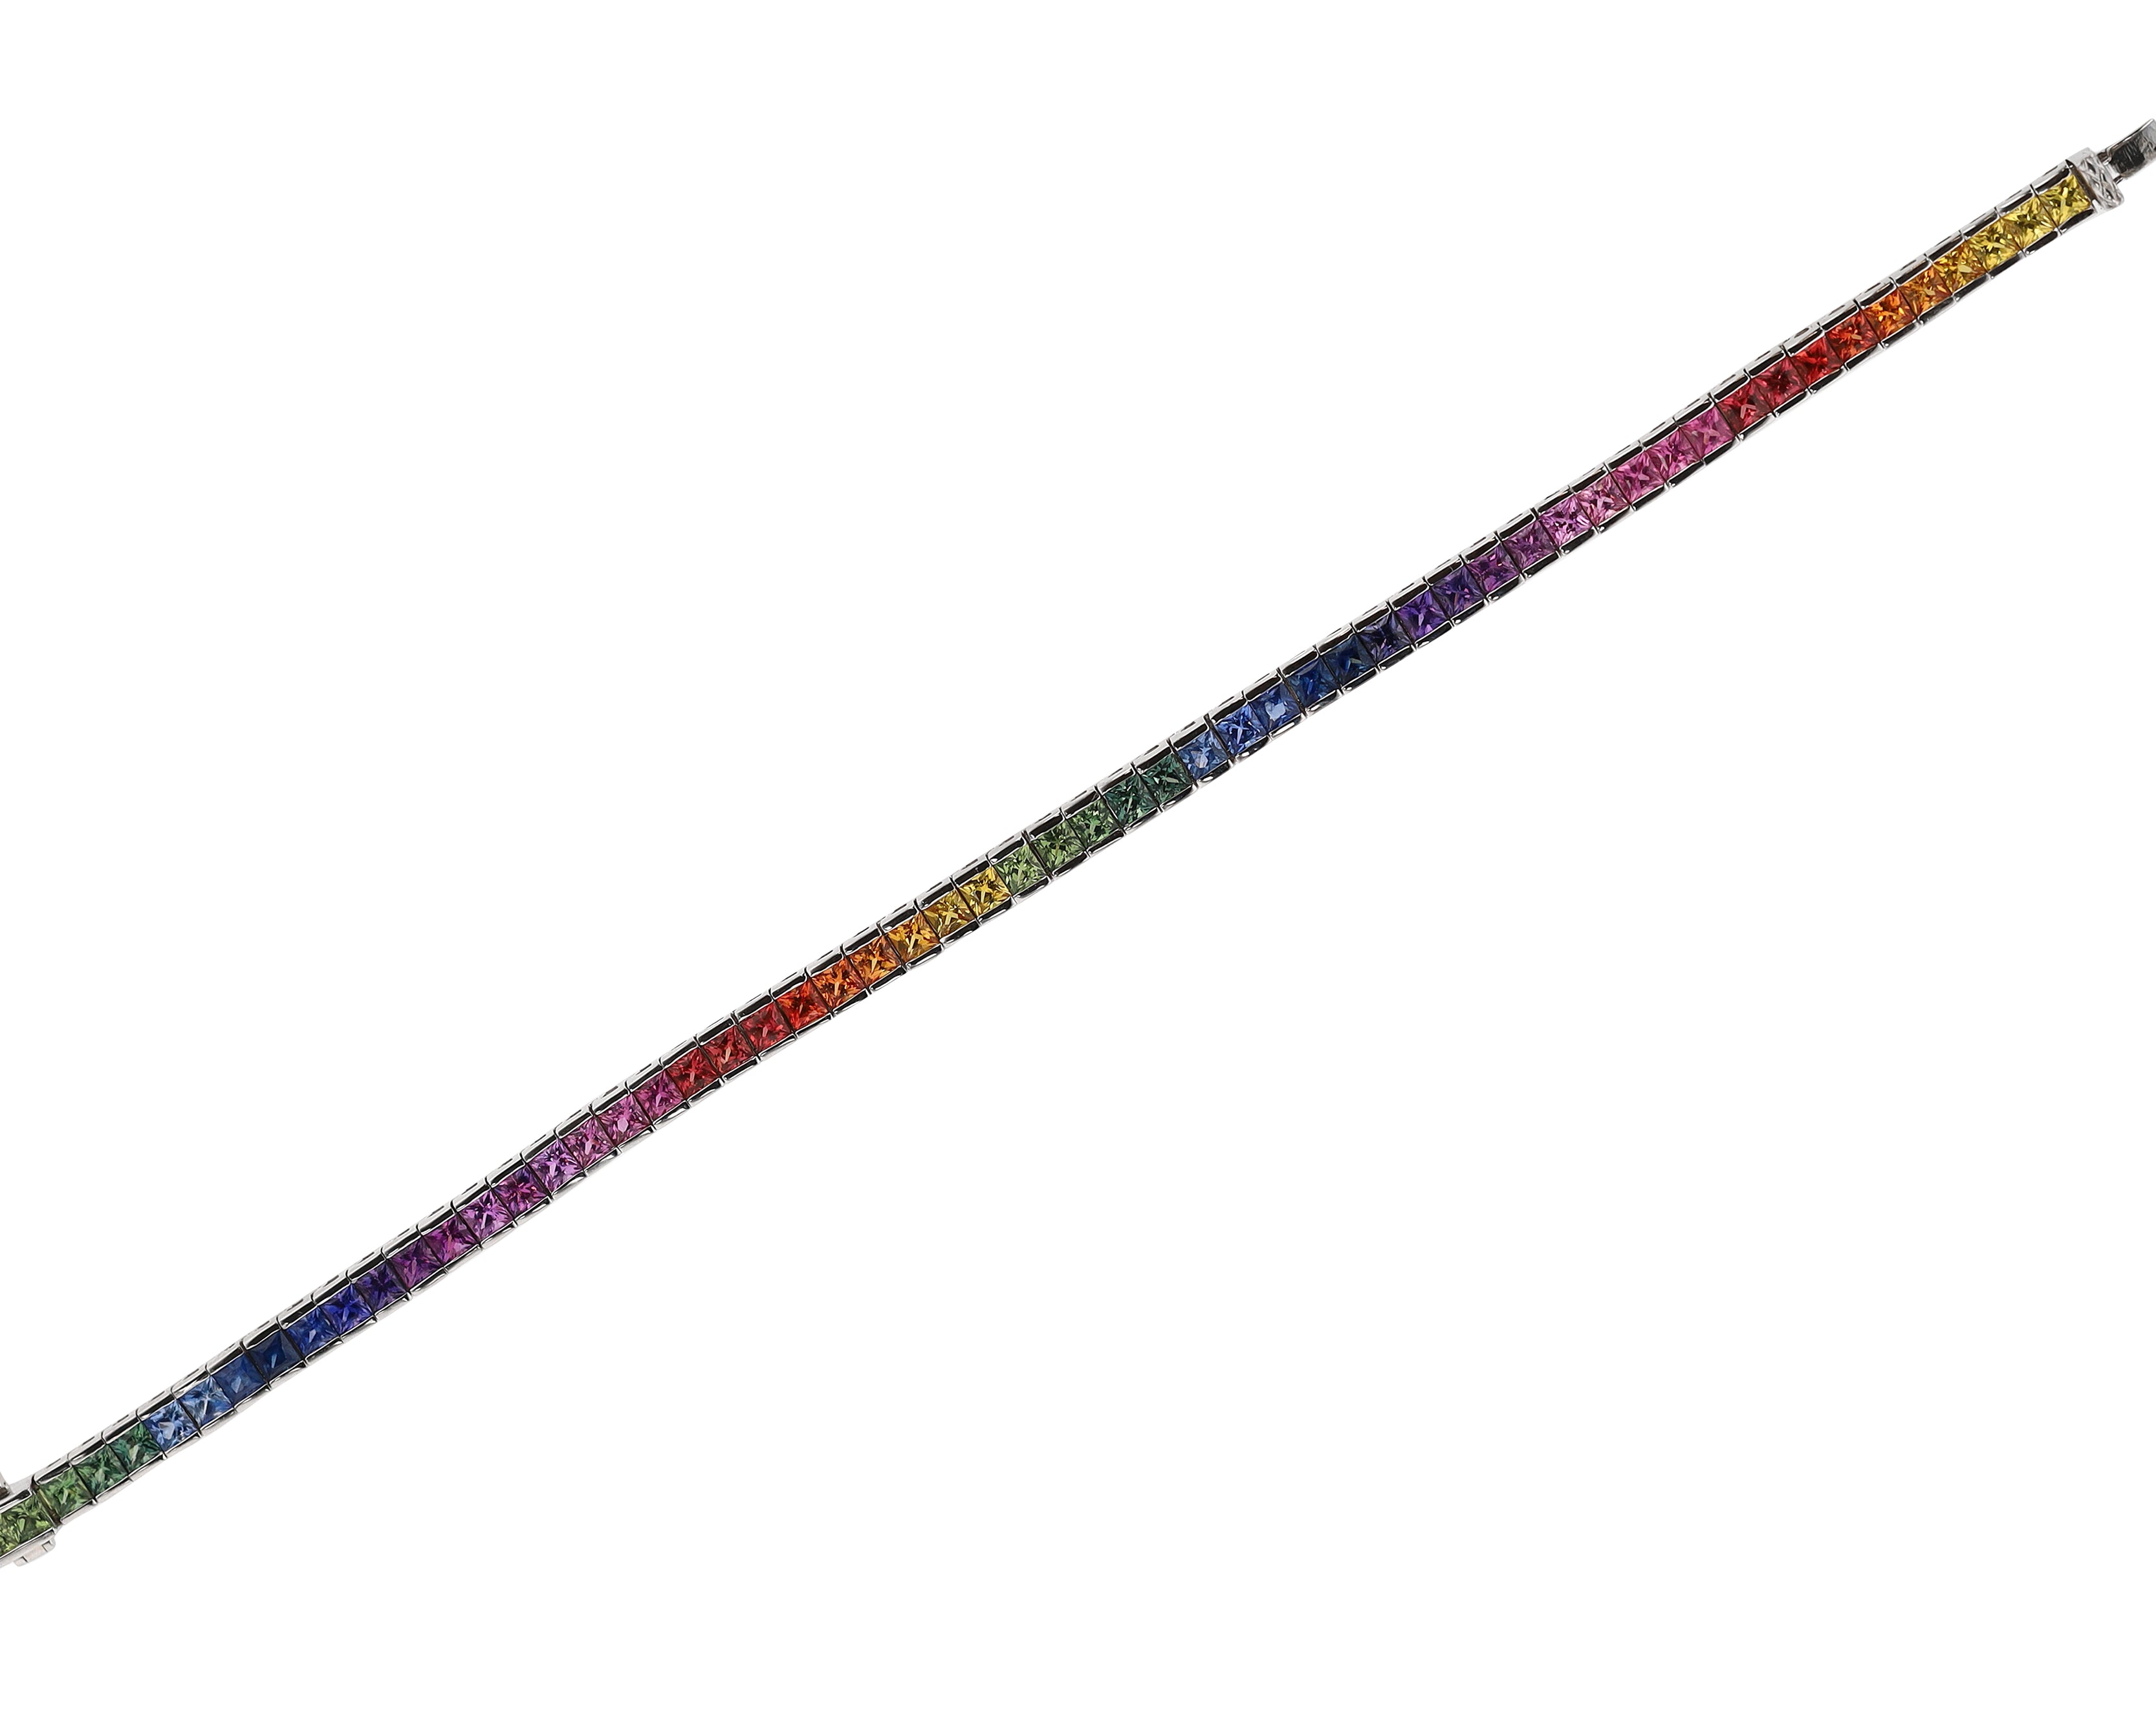 Rainbow Sapphire Tennis Bracelet